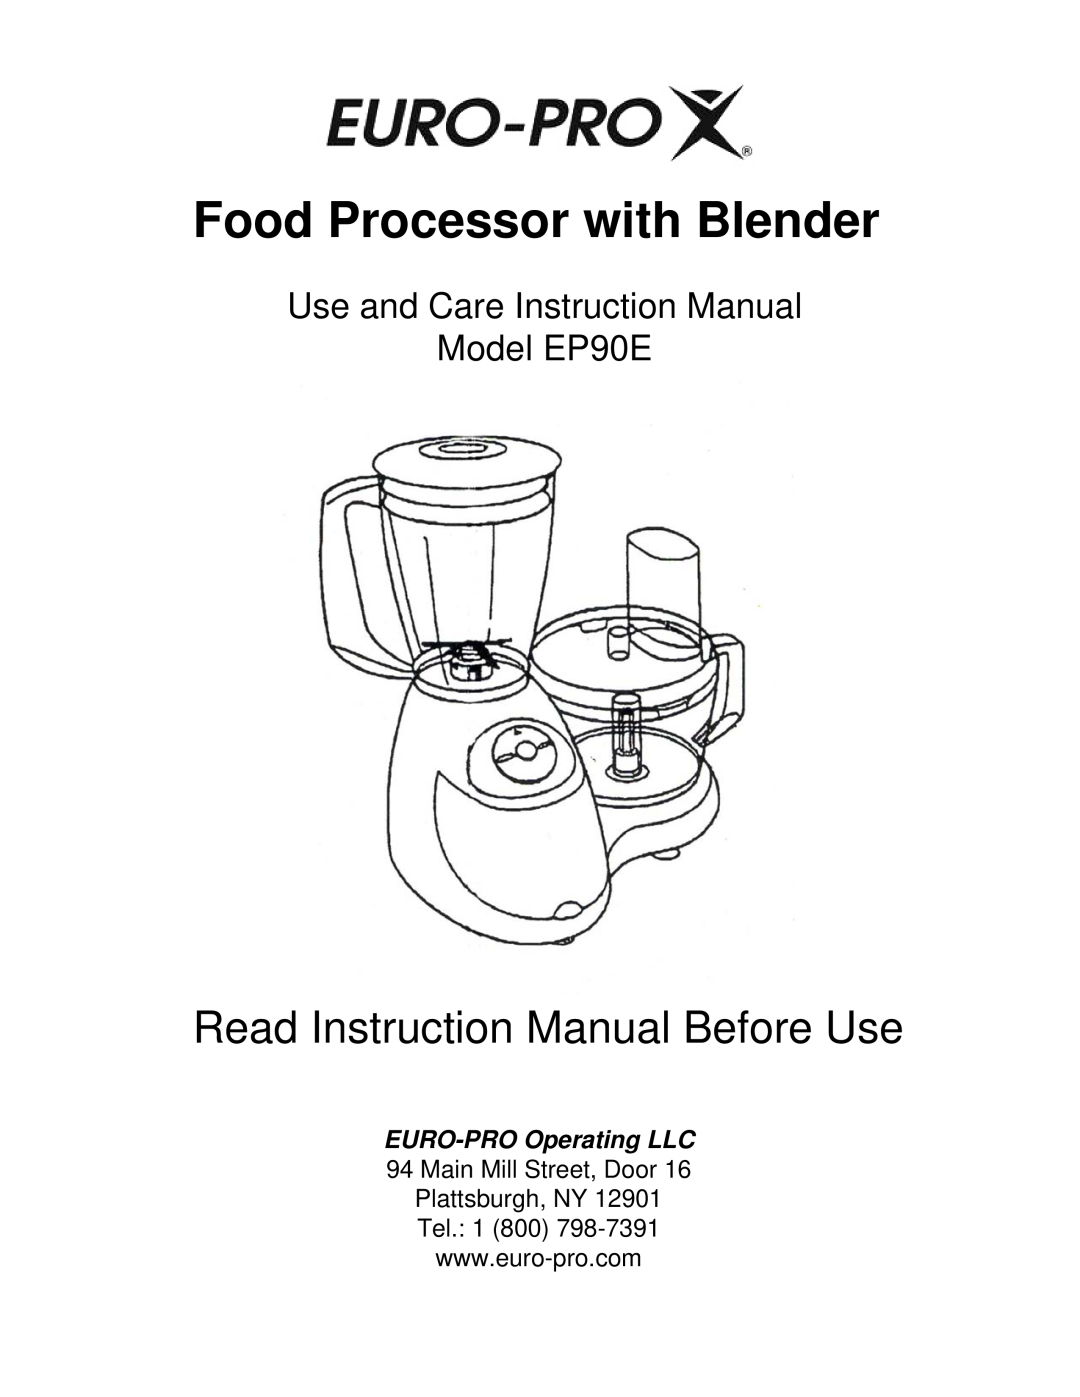 Euro-Pro EP90E instruction manual Main Mill Street, Door Plattsburgh, NY, Food Processor with Blender 